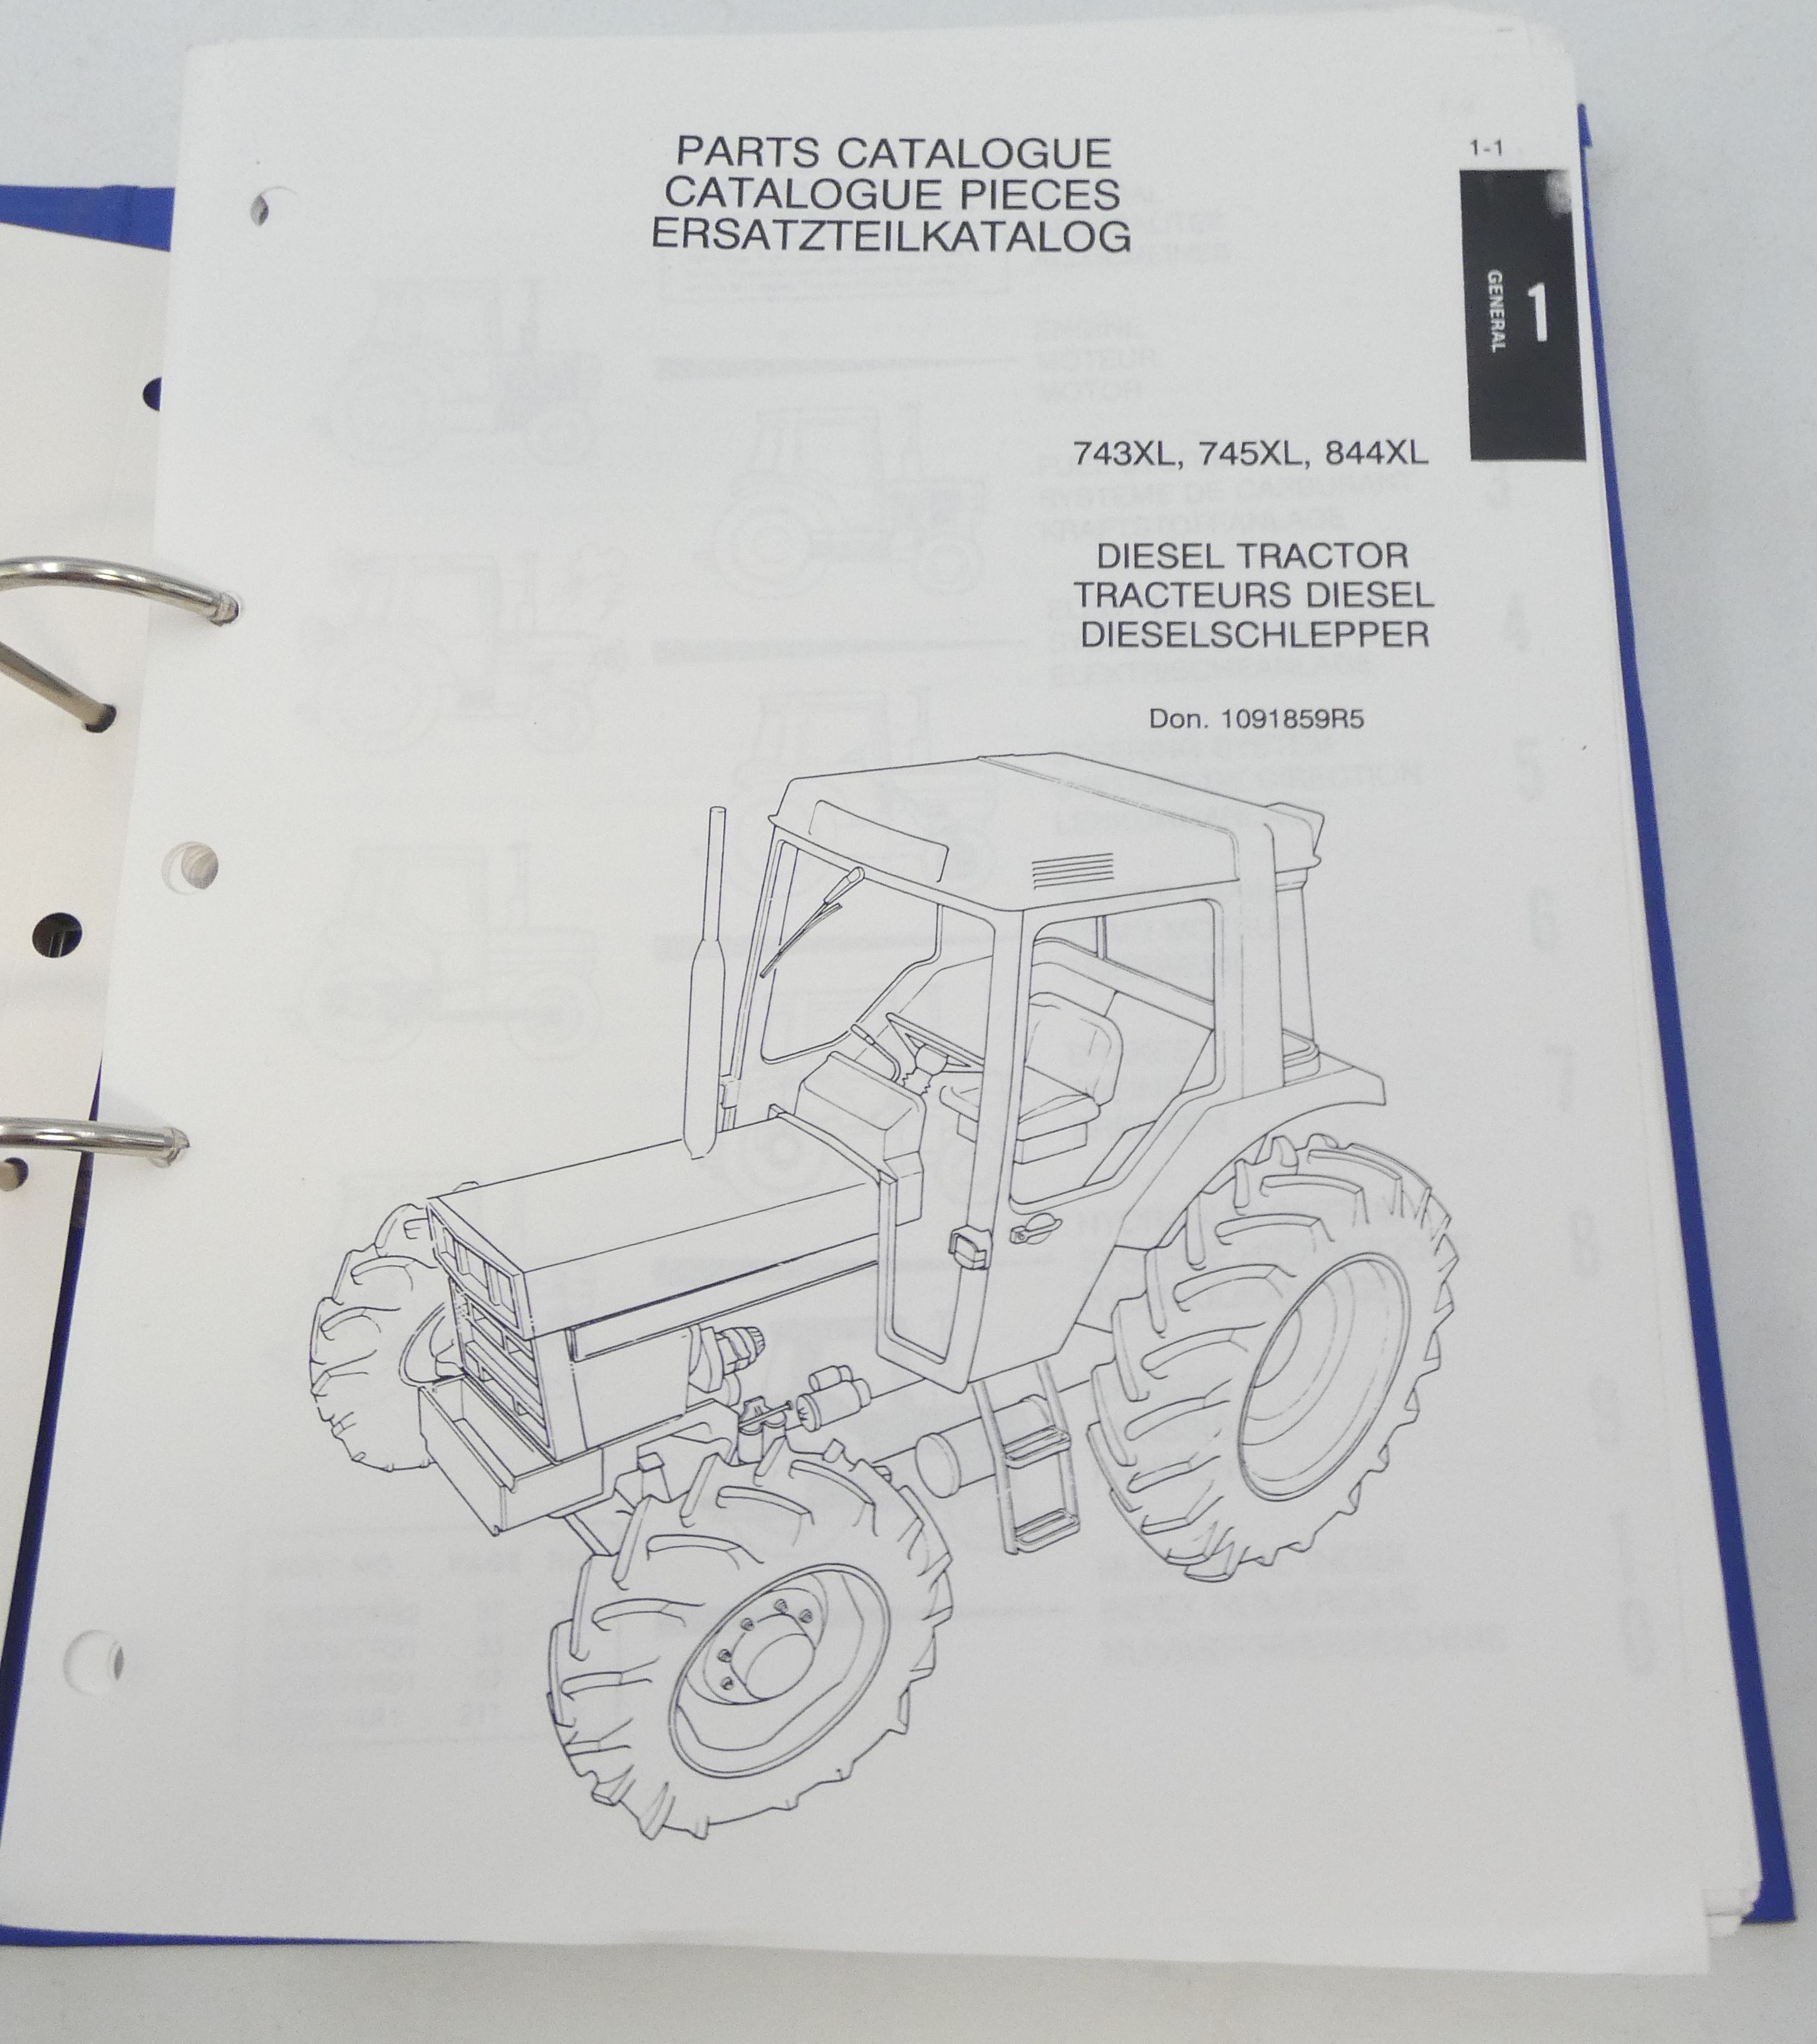 Case 743XL, 745XL, 844XL diesel tractor parts catalogue